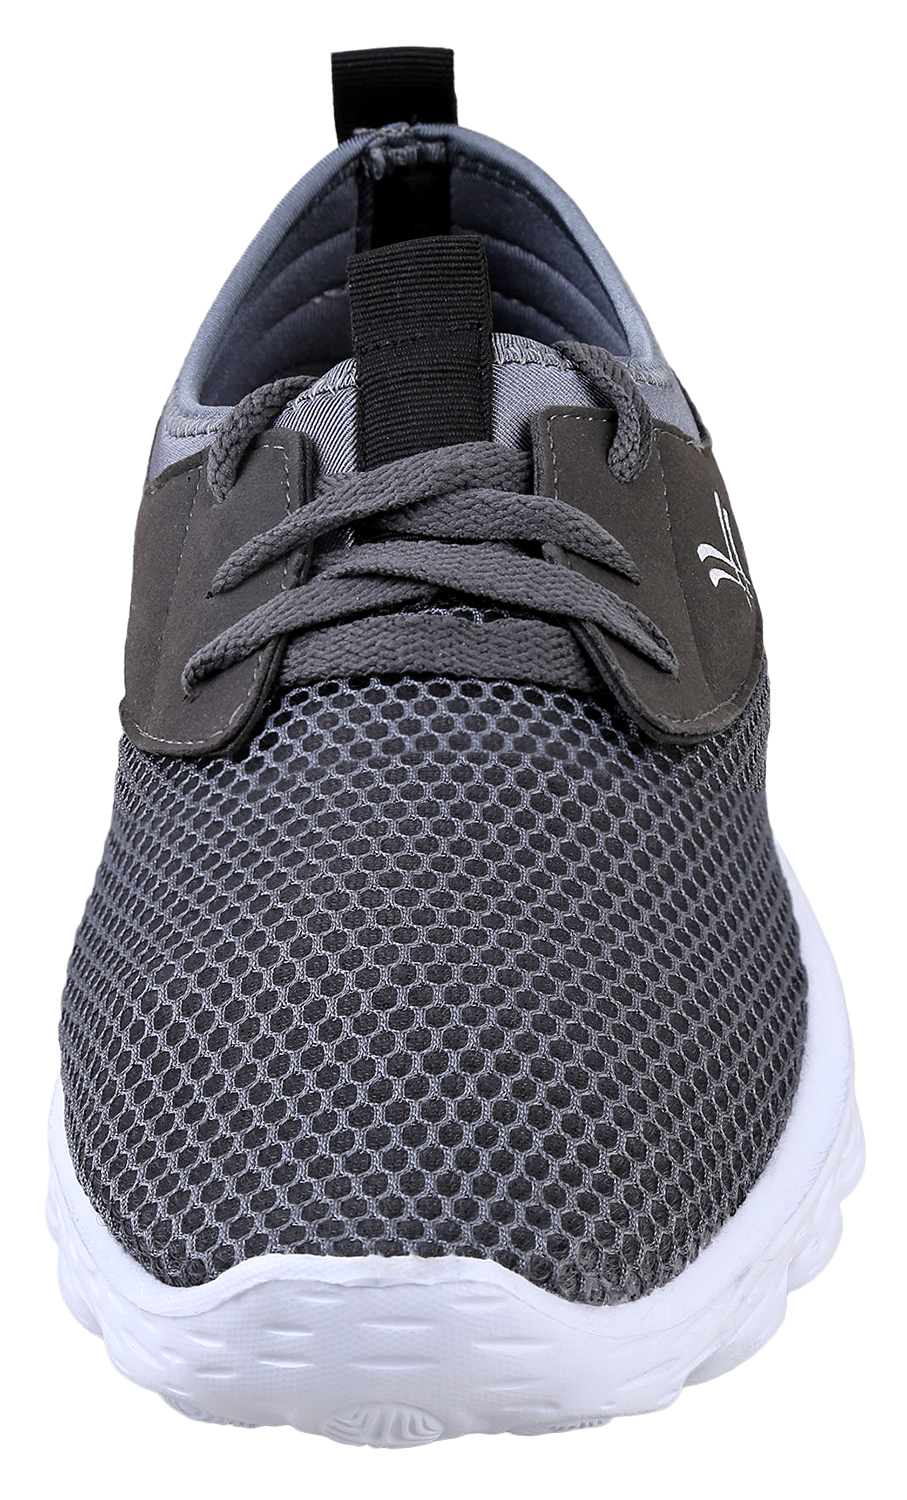 Urban Fox Men's Breeze Lightweight Shoes | Lightweight Shoes for Men | Casual Shoes | Walking Shoes for Men | Grey/White 11 M US - image 3 of 7